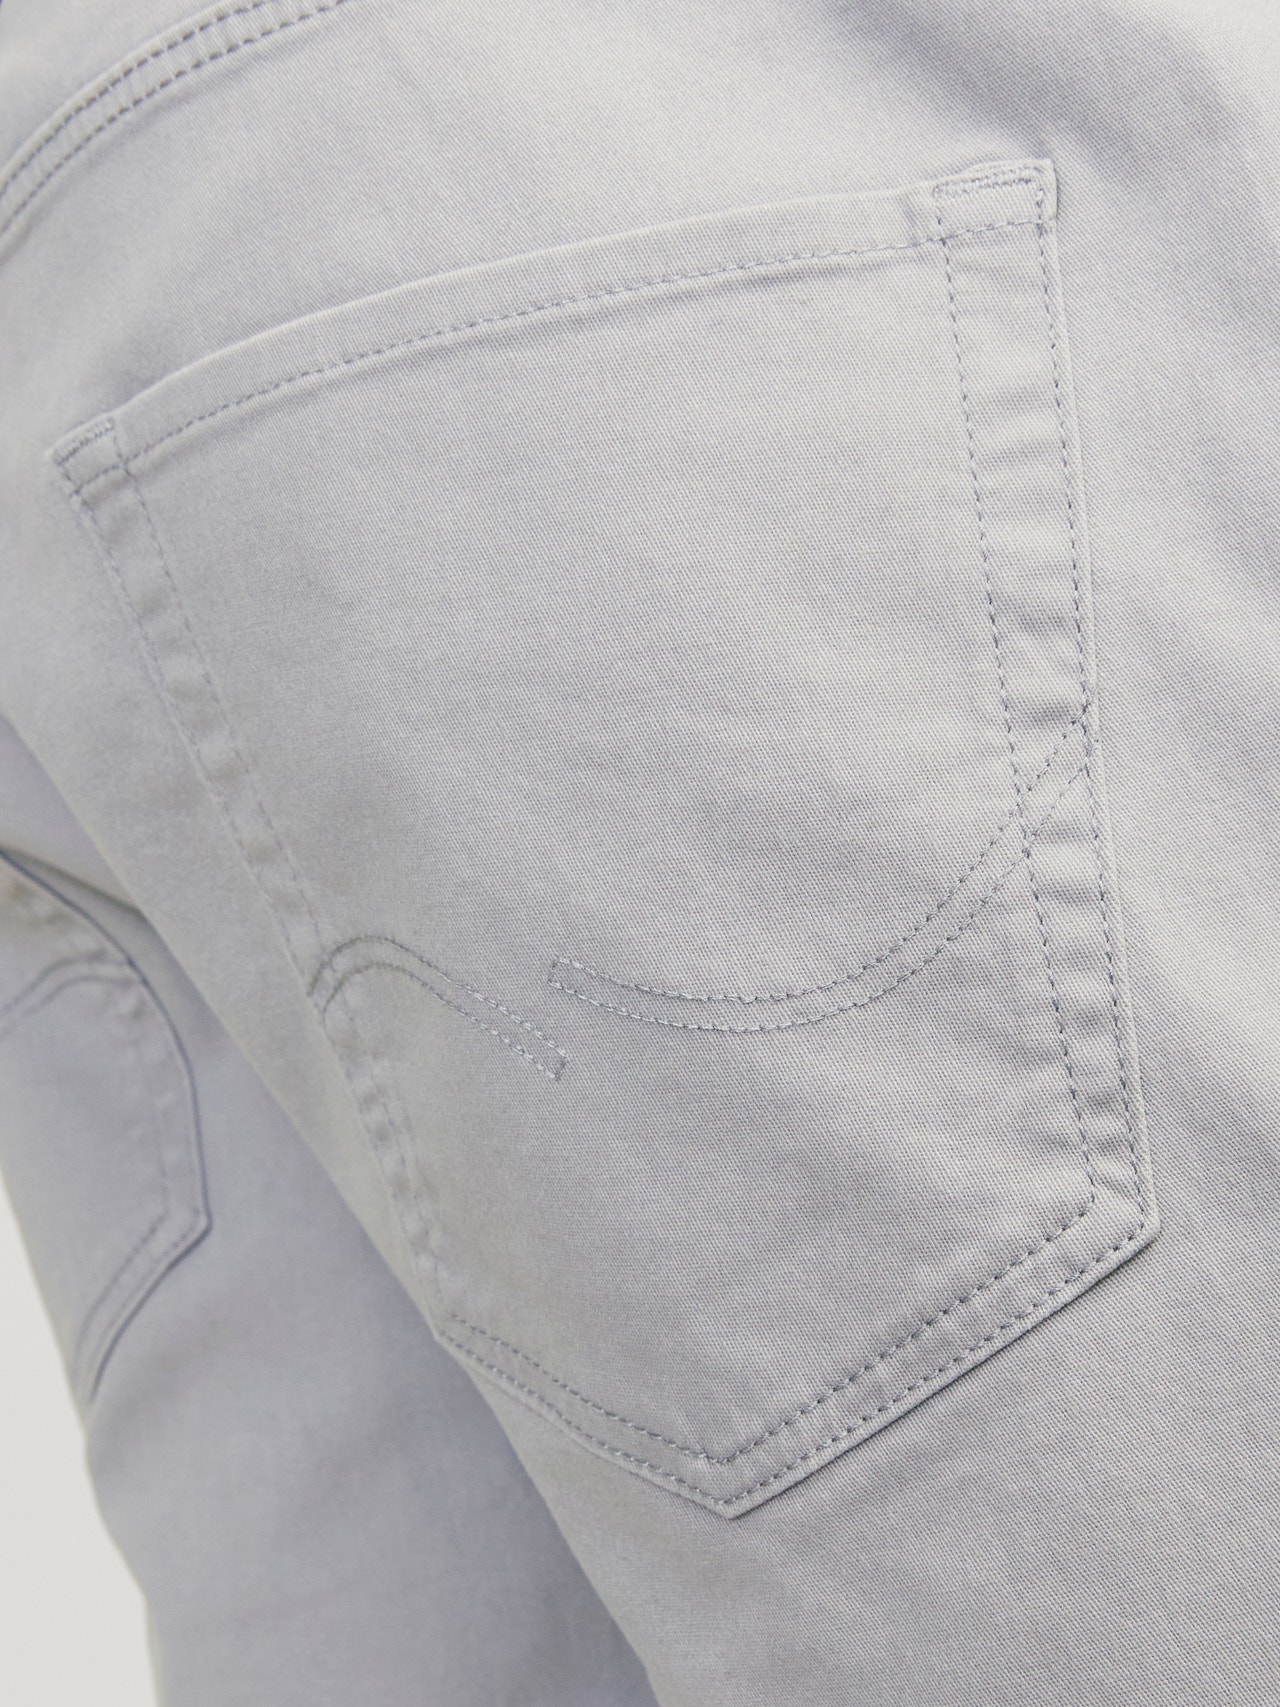 Jack & Jones Regular Fit Jeans-Shorts -Ultimate Grey - 12165892